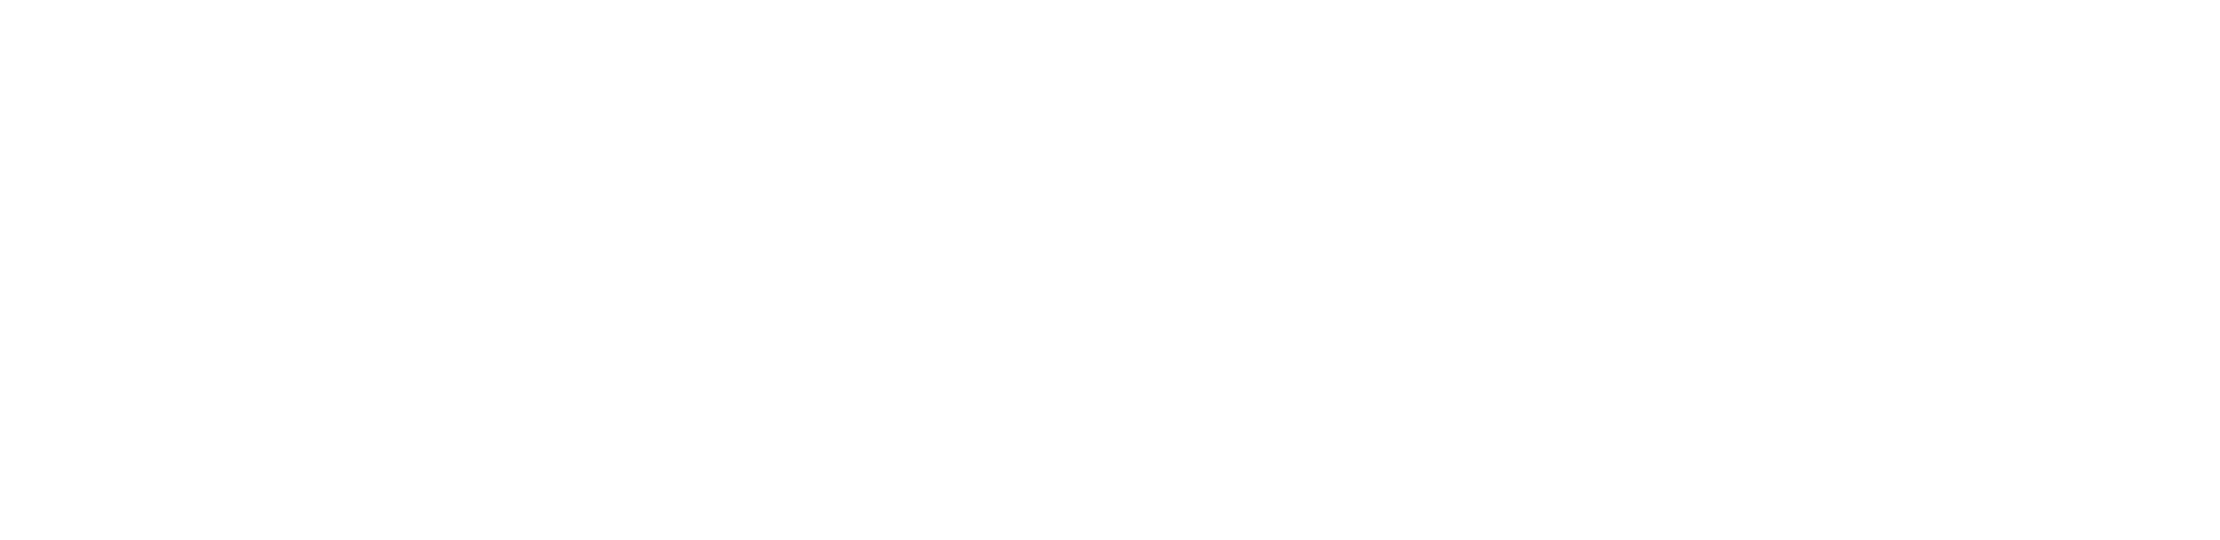 Meth-web-long-2220x540-moveandnourish-logo-ideas-w